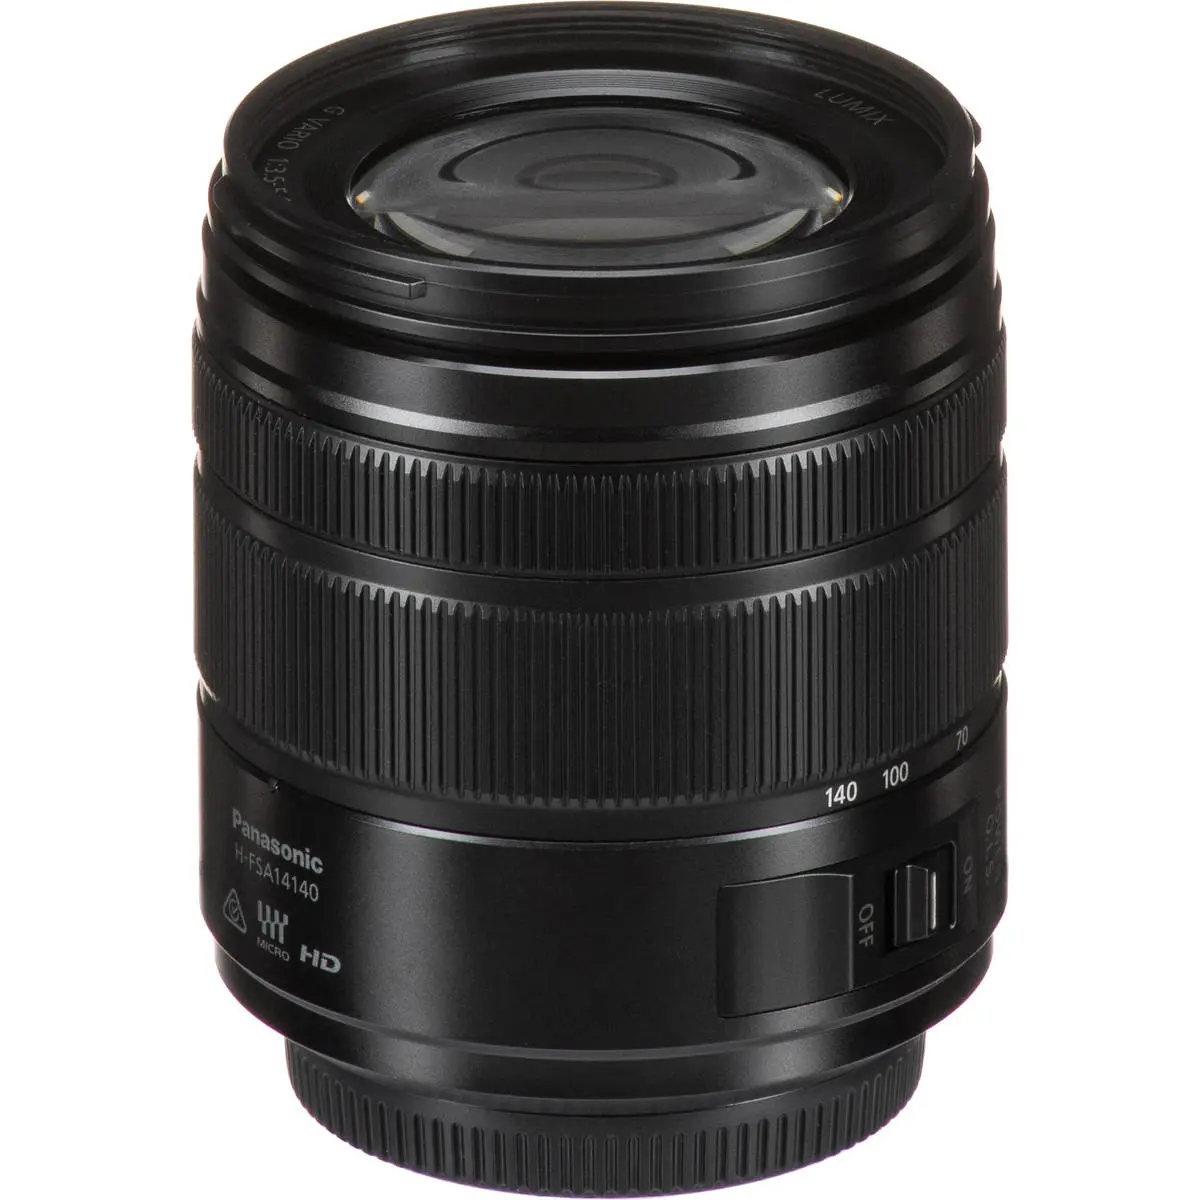 9. Panasonic G VARIO 14-140mm F3.5-5.6 MK II (Black) Lens